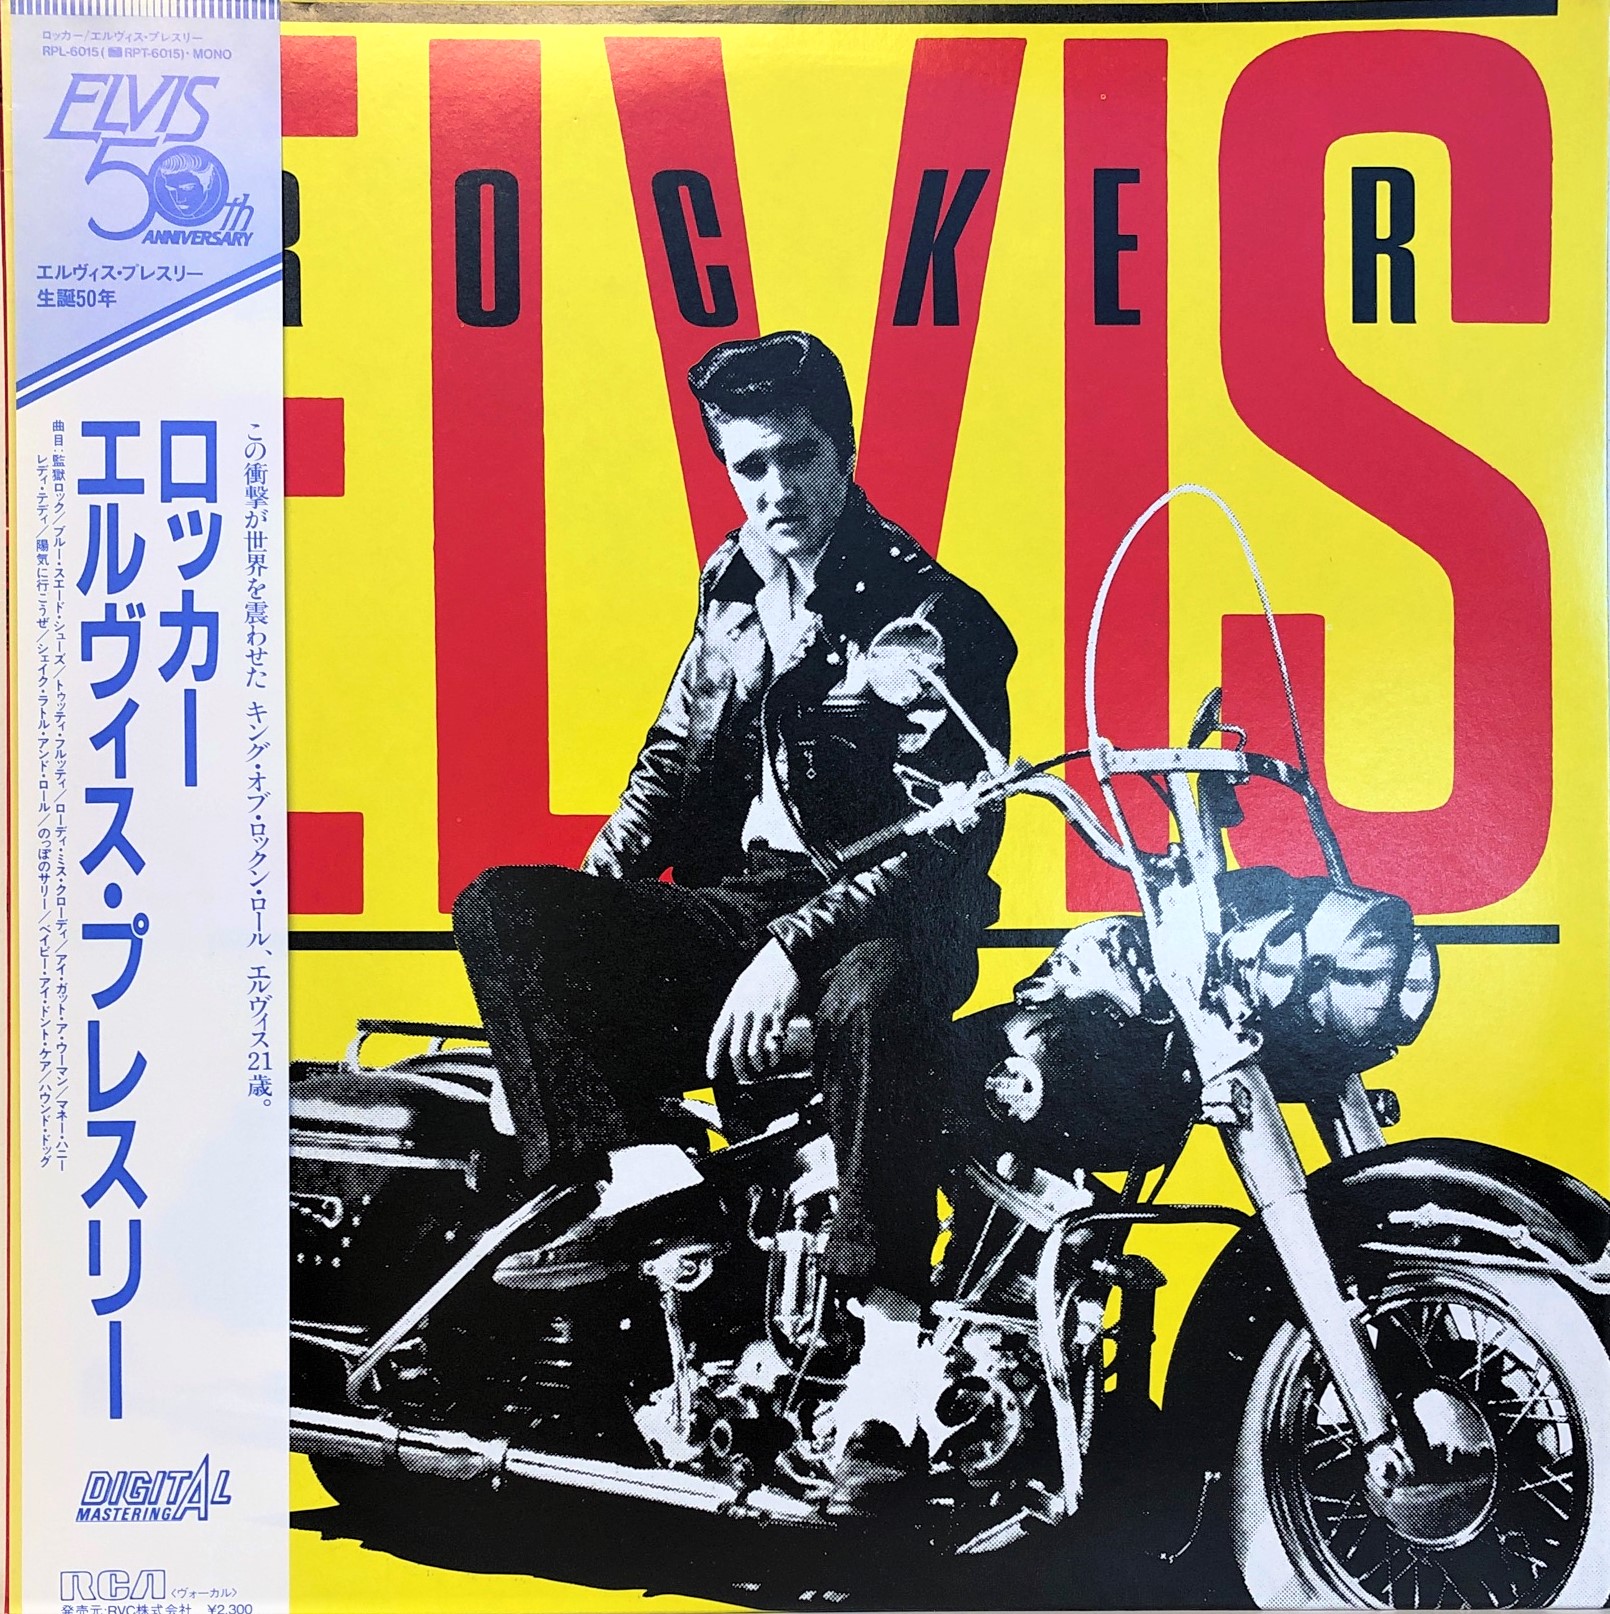 Elvis Presley ‎– Rocker | 中古レコード通販・買取のアカル・レコーズ